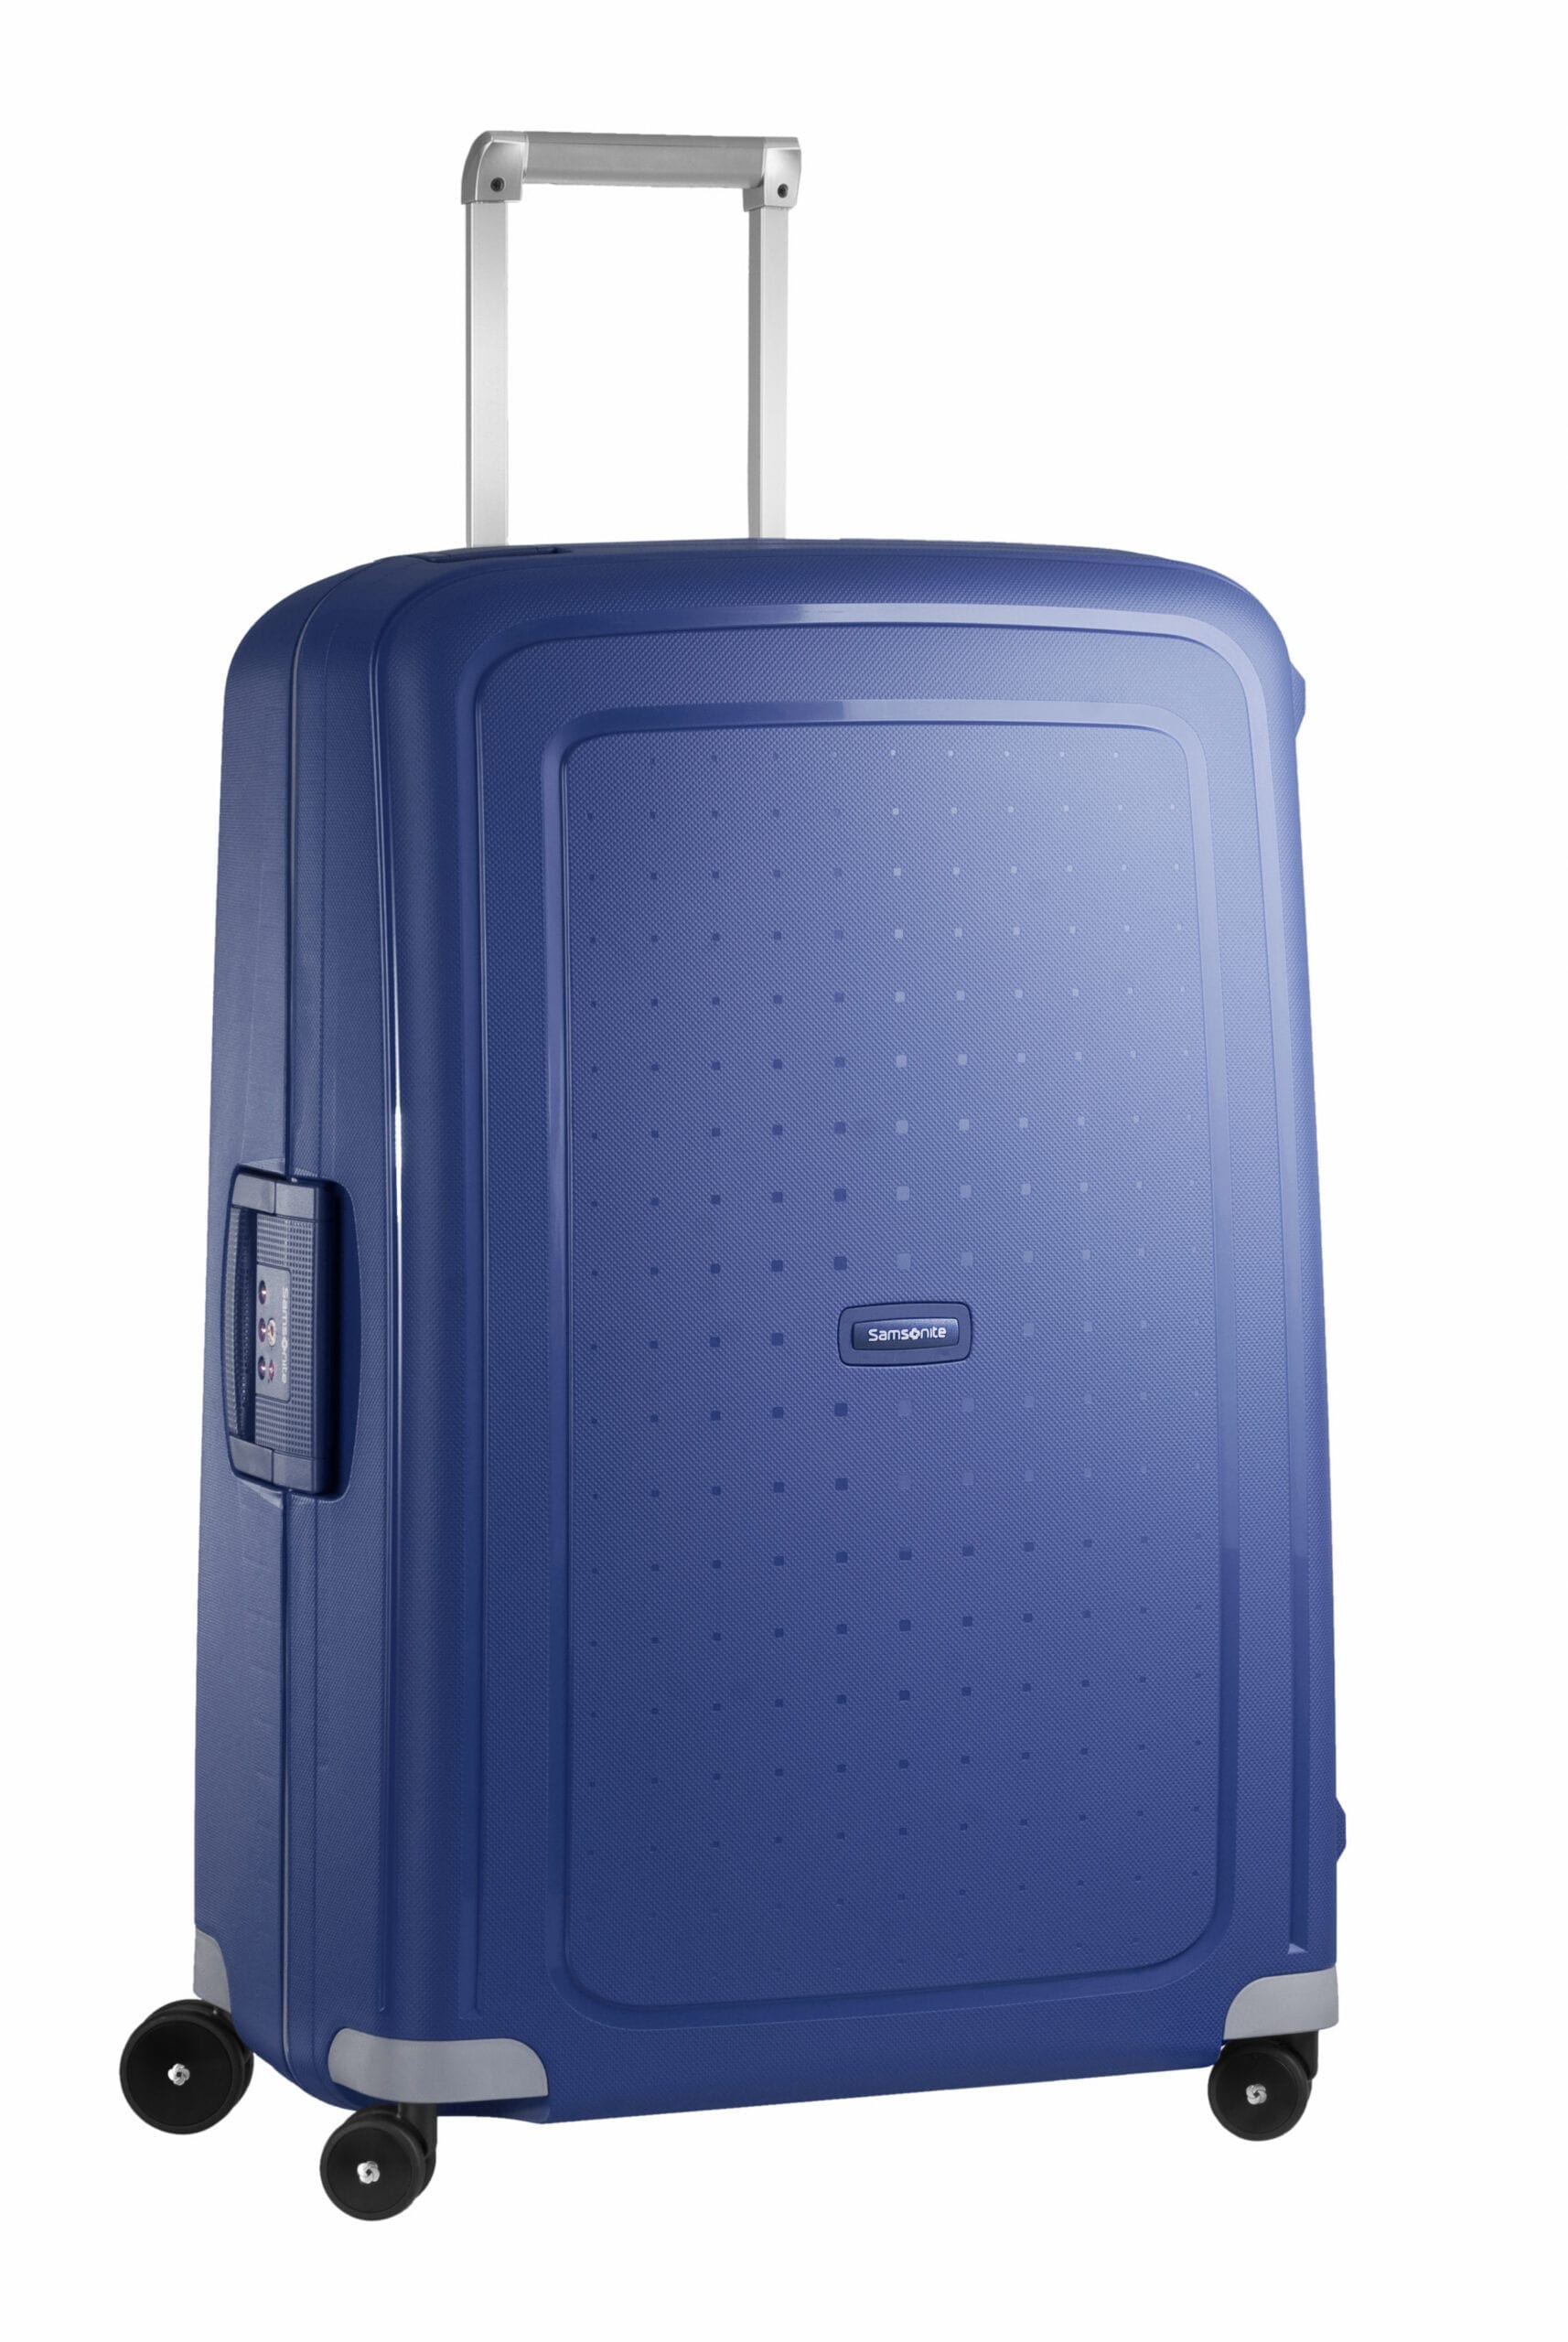 Beschuldiging Inefficiënt enkel Samsonite S'Cure Koffer 75 cm Dark Blue | Goodwalt Bags & Cases